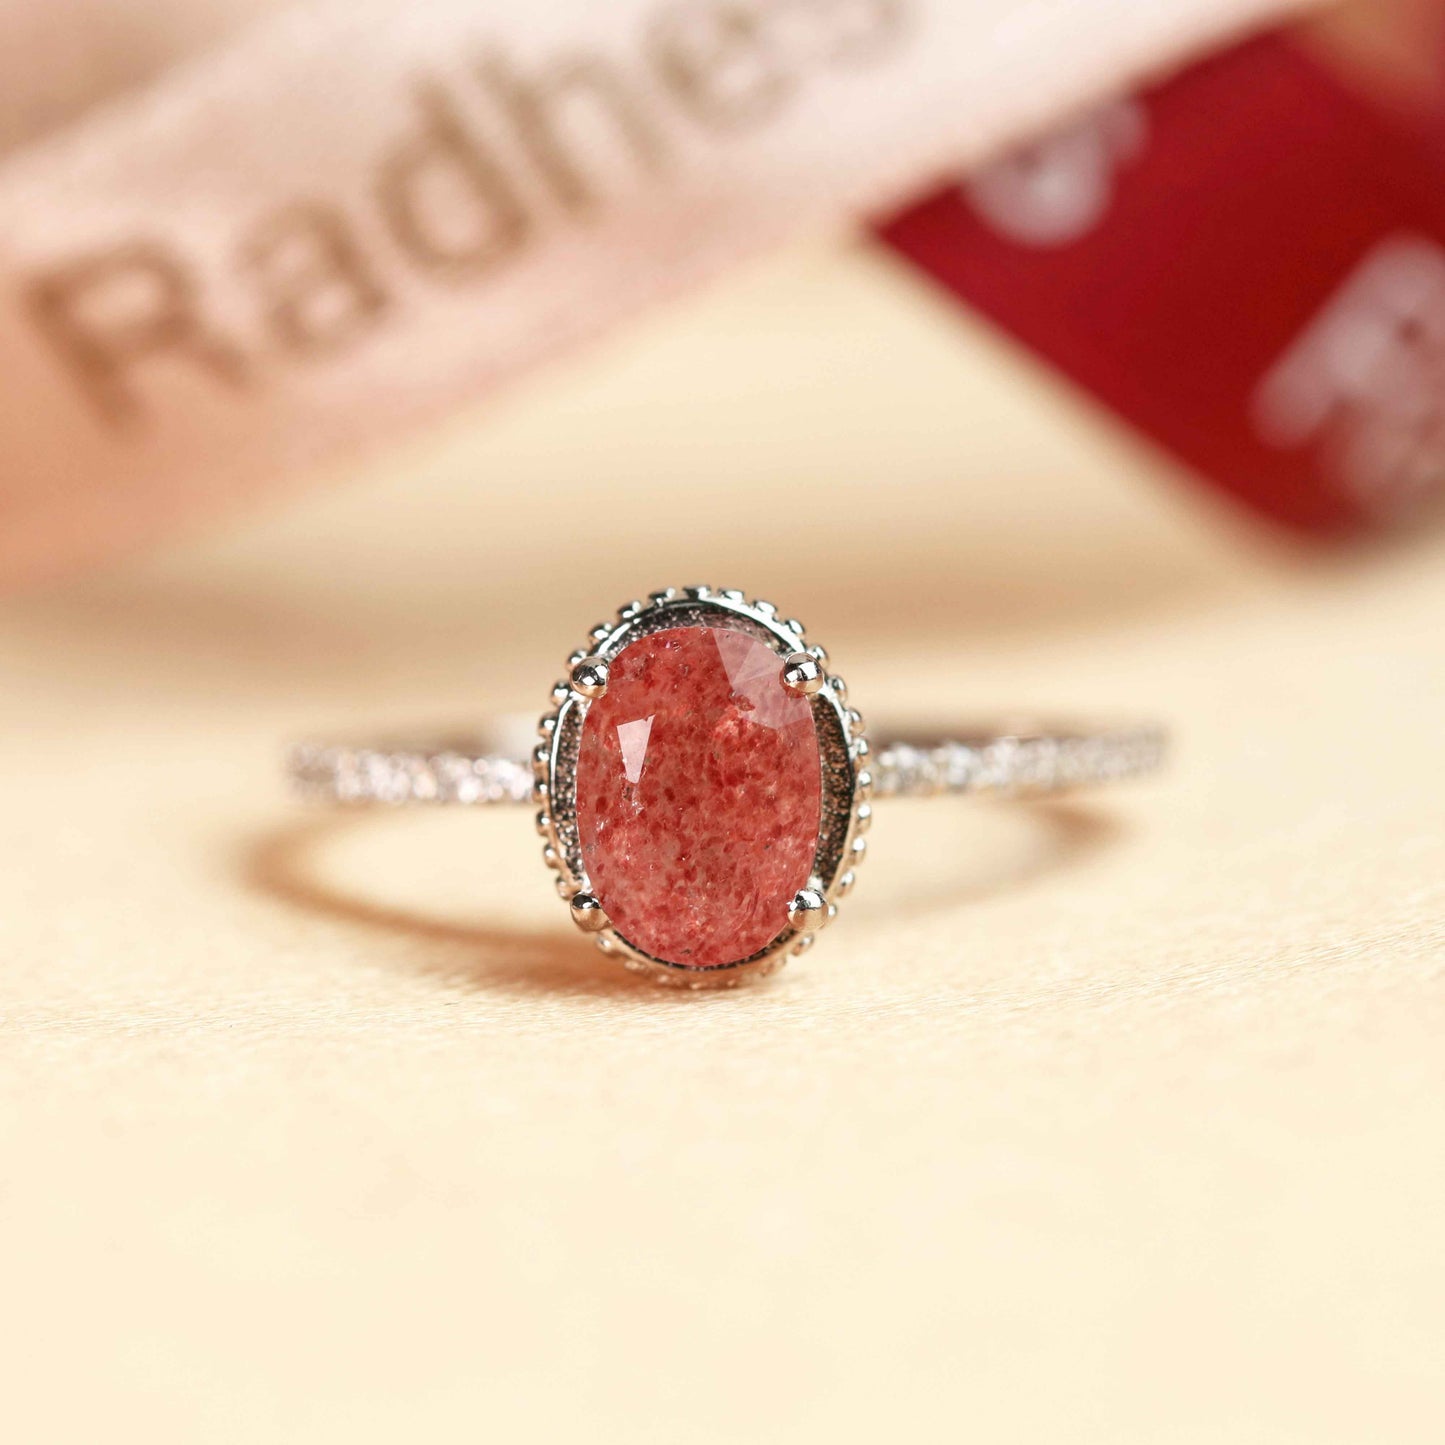 Huge 1.25 carat Oval Cut Red Strawberry Quartz and Diamond Milgrain Bezel Set Engagement Ring in White Gold